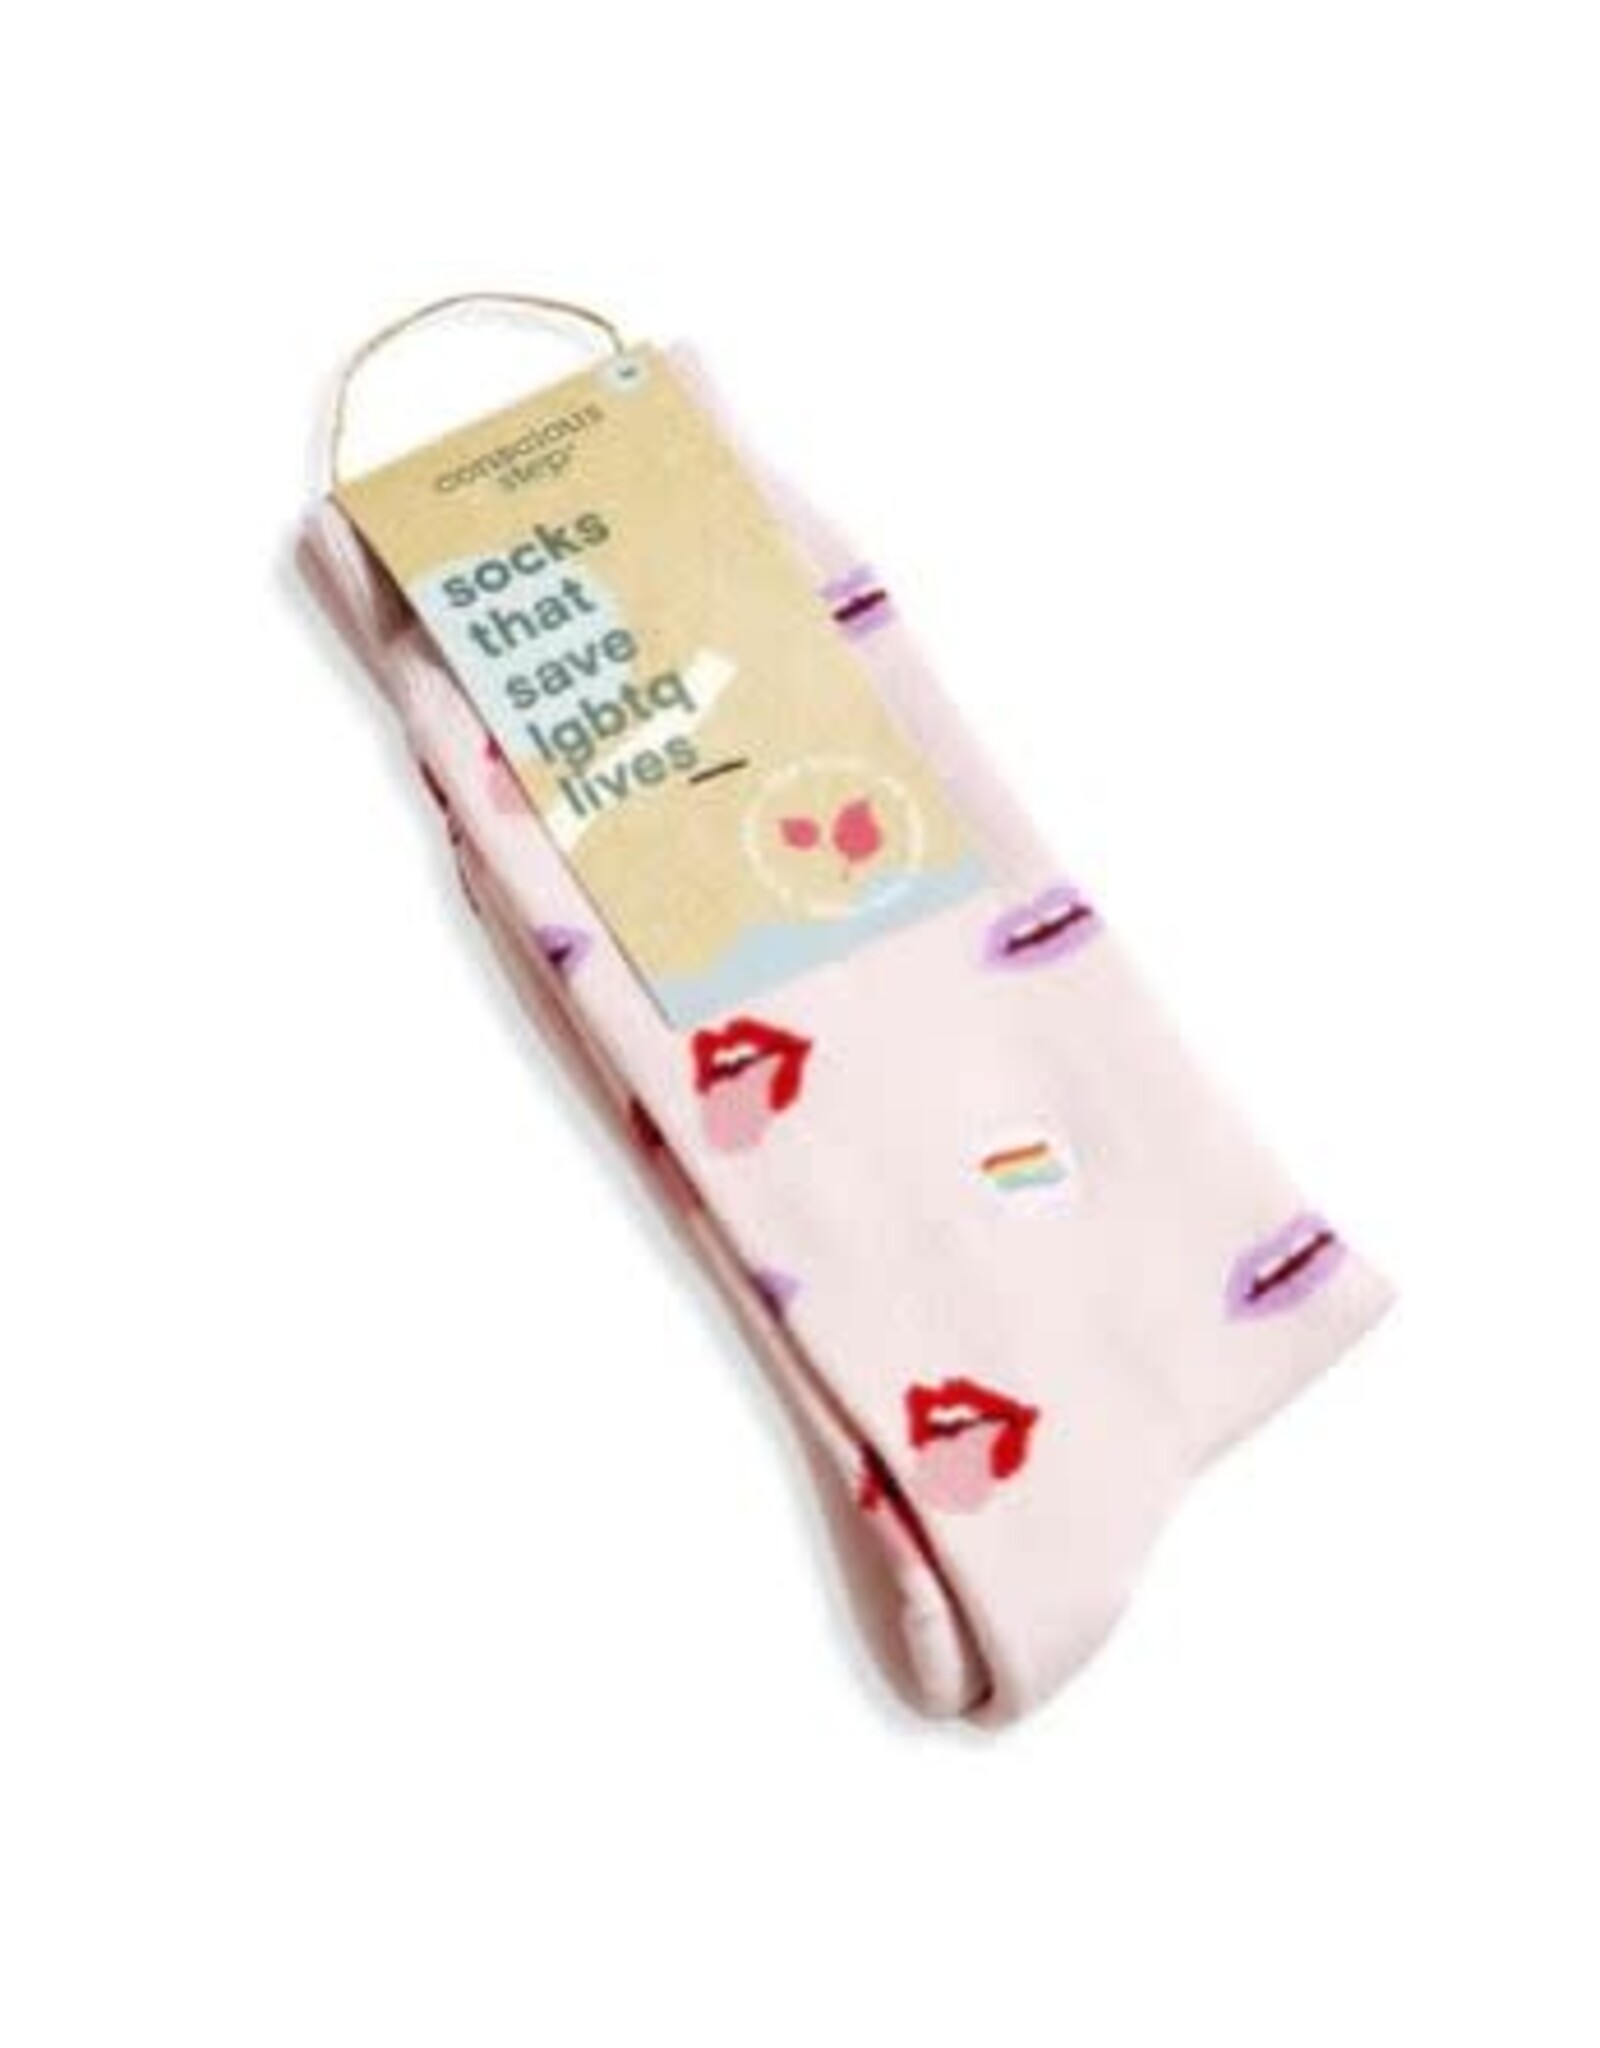 India Crew Socks That Save LGBTQ Lives - Pink Lips